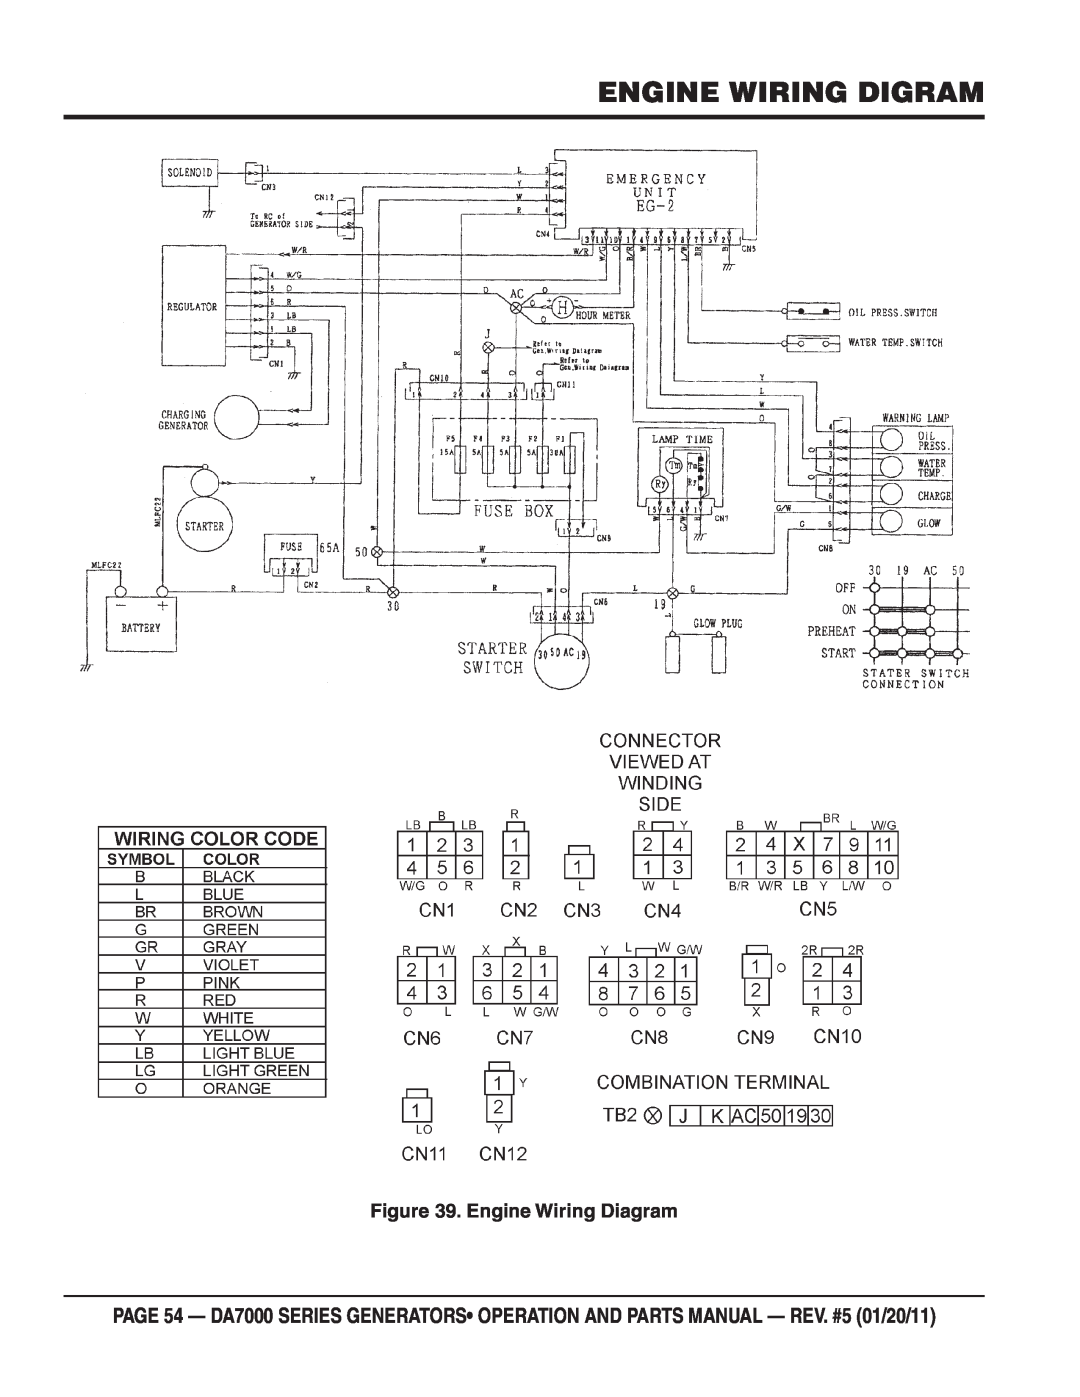 Multiquip DA7000WGH, DA700SSW manual Engine Wiring Digram, Engine Wiring Diagram 